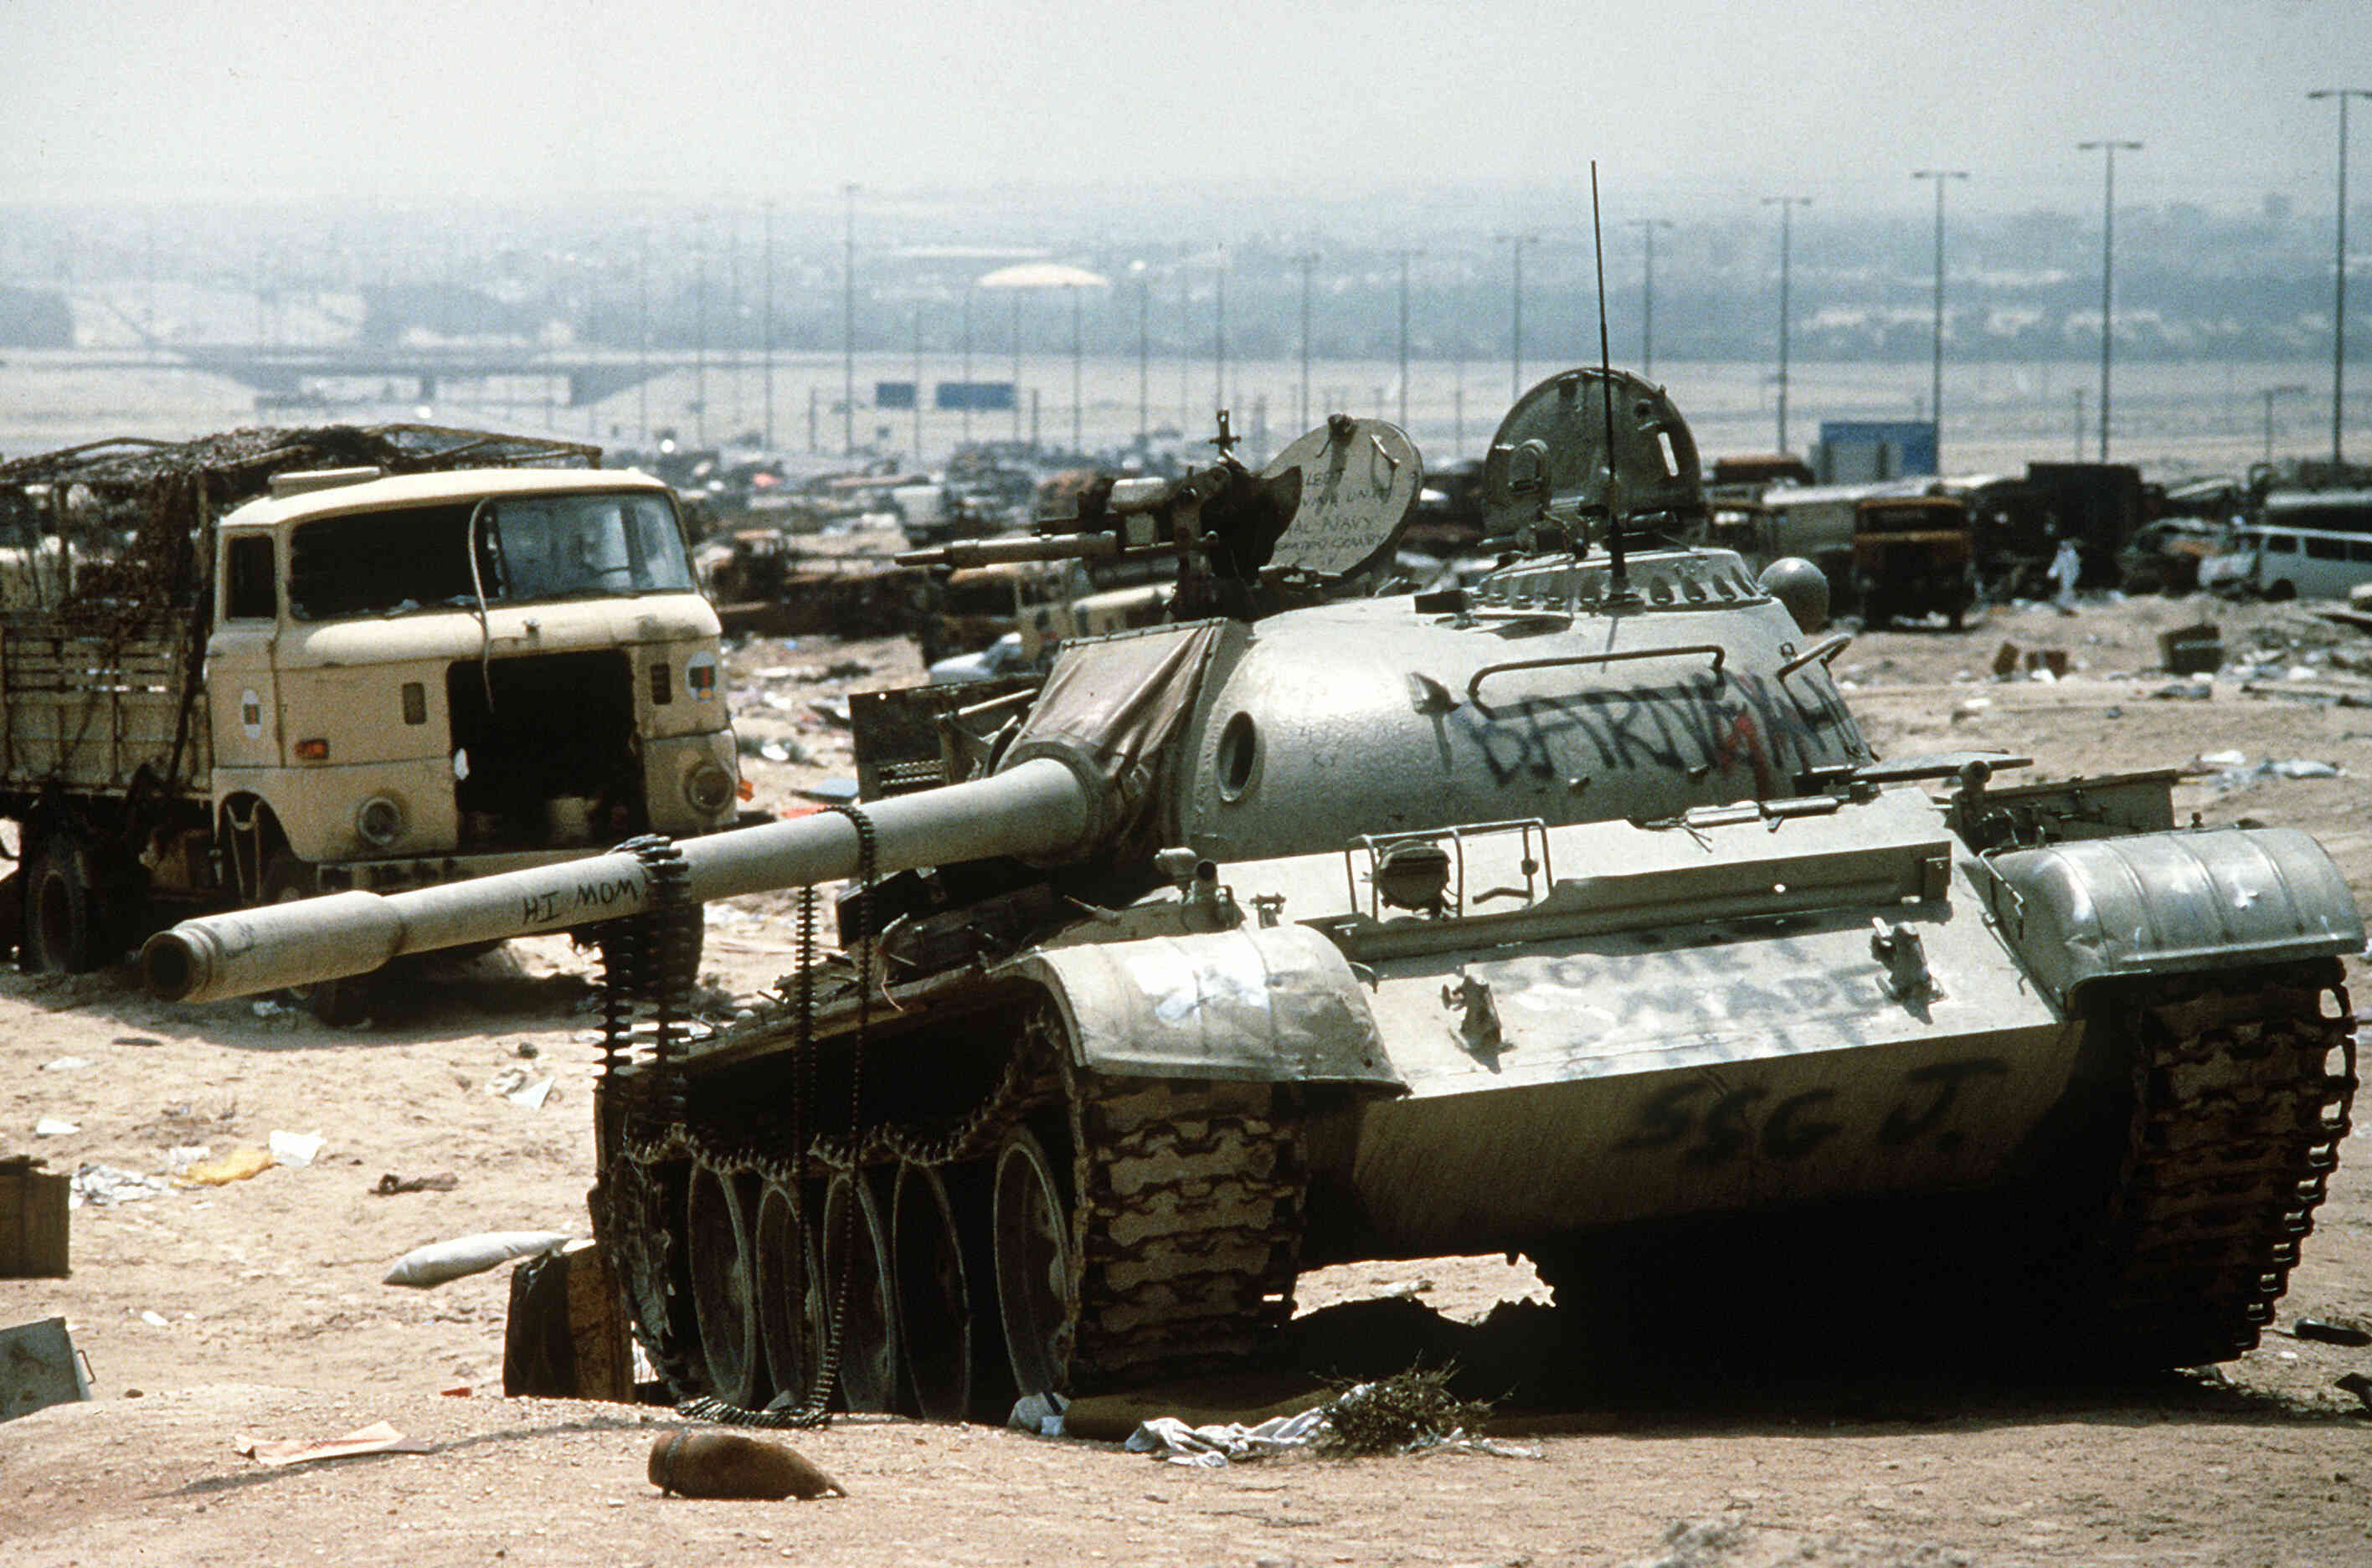 raakse tankwrakken in Koeweit na de Golfoorlog.Bron: Luchtmacht VS/Tech. Sgt. Joe Coleman, USAF via Wikimedia Commons